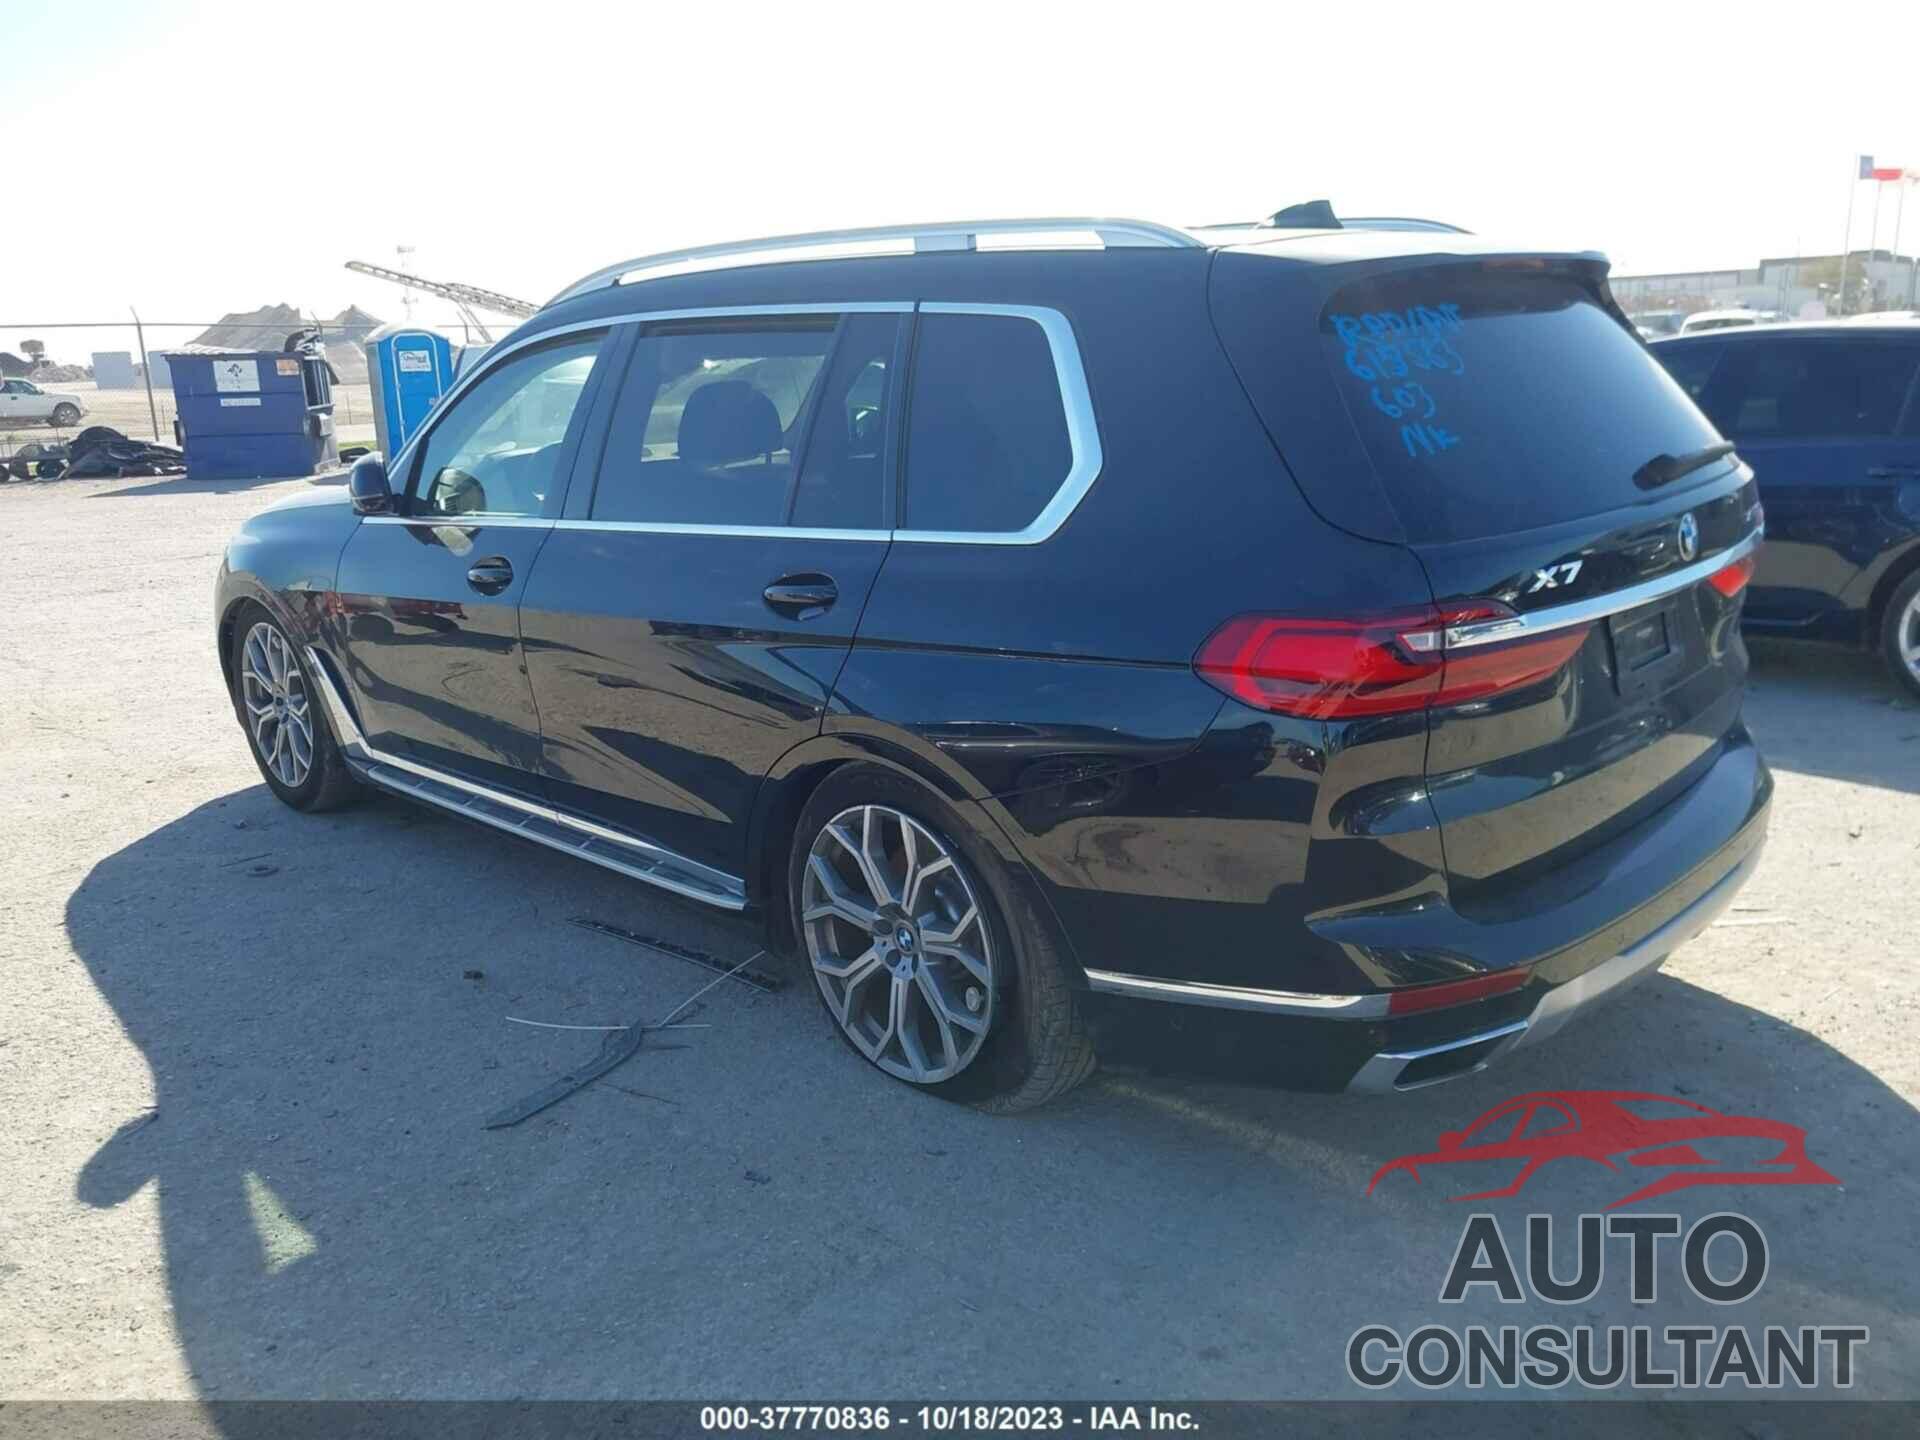 BMW X7 2019 - 5UXCX4C59KLS38887